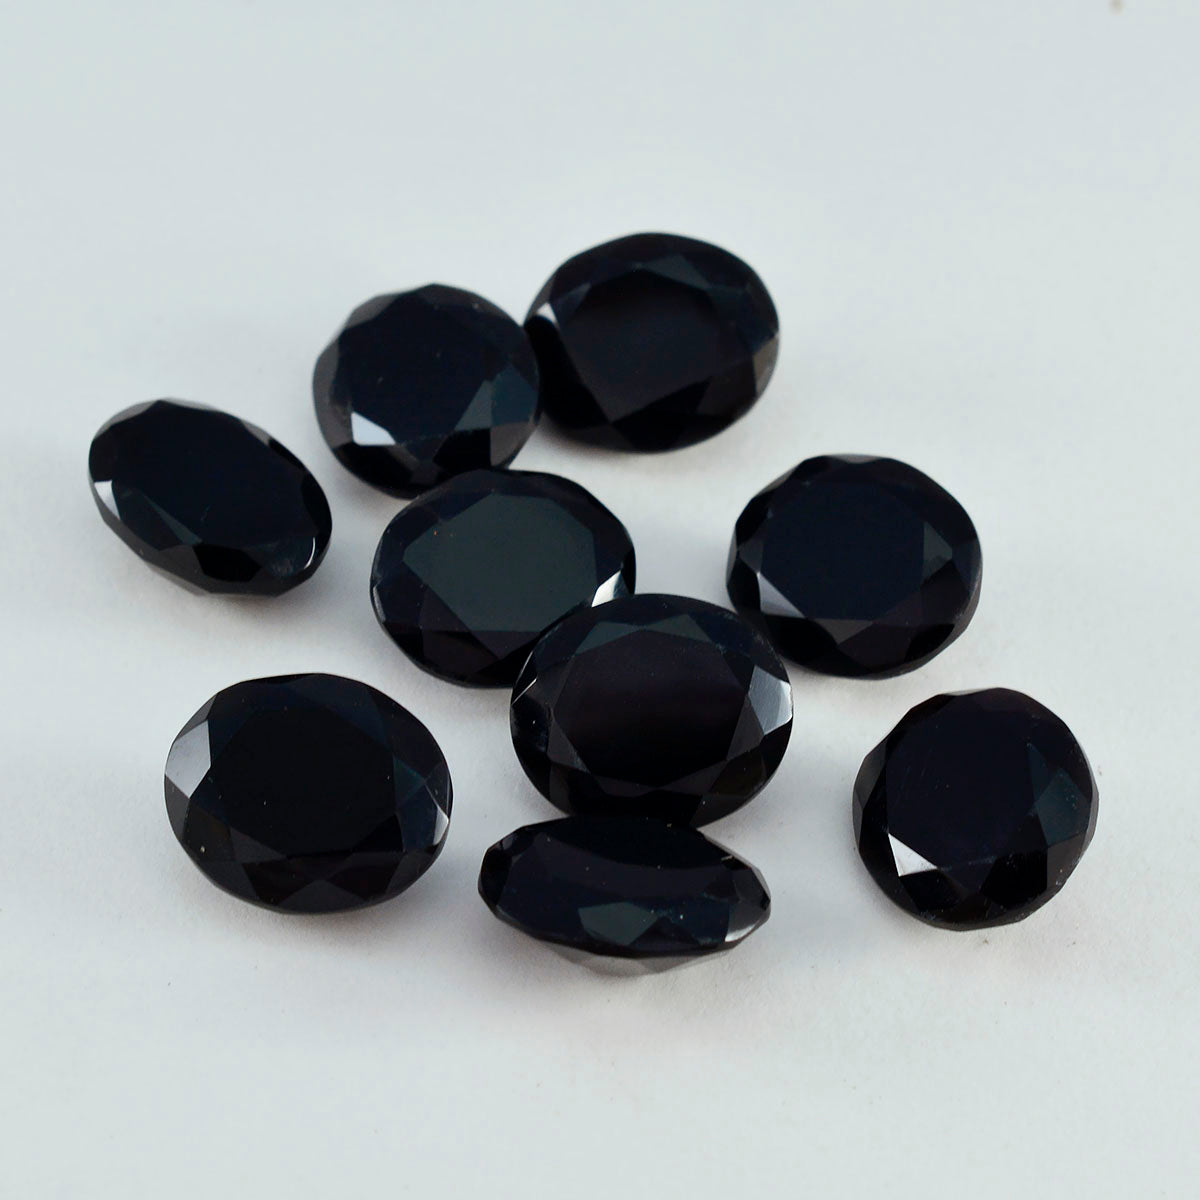 Riyogems 1PC Genuine Black Onyx Faceted 10x12 mm Oval Shape superb Quality Stone